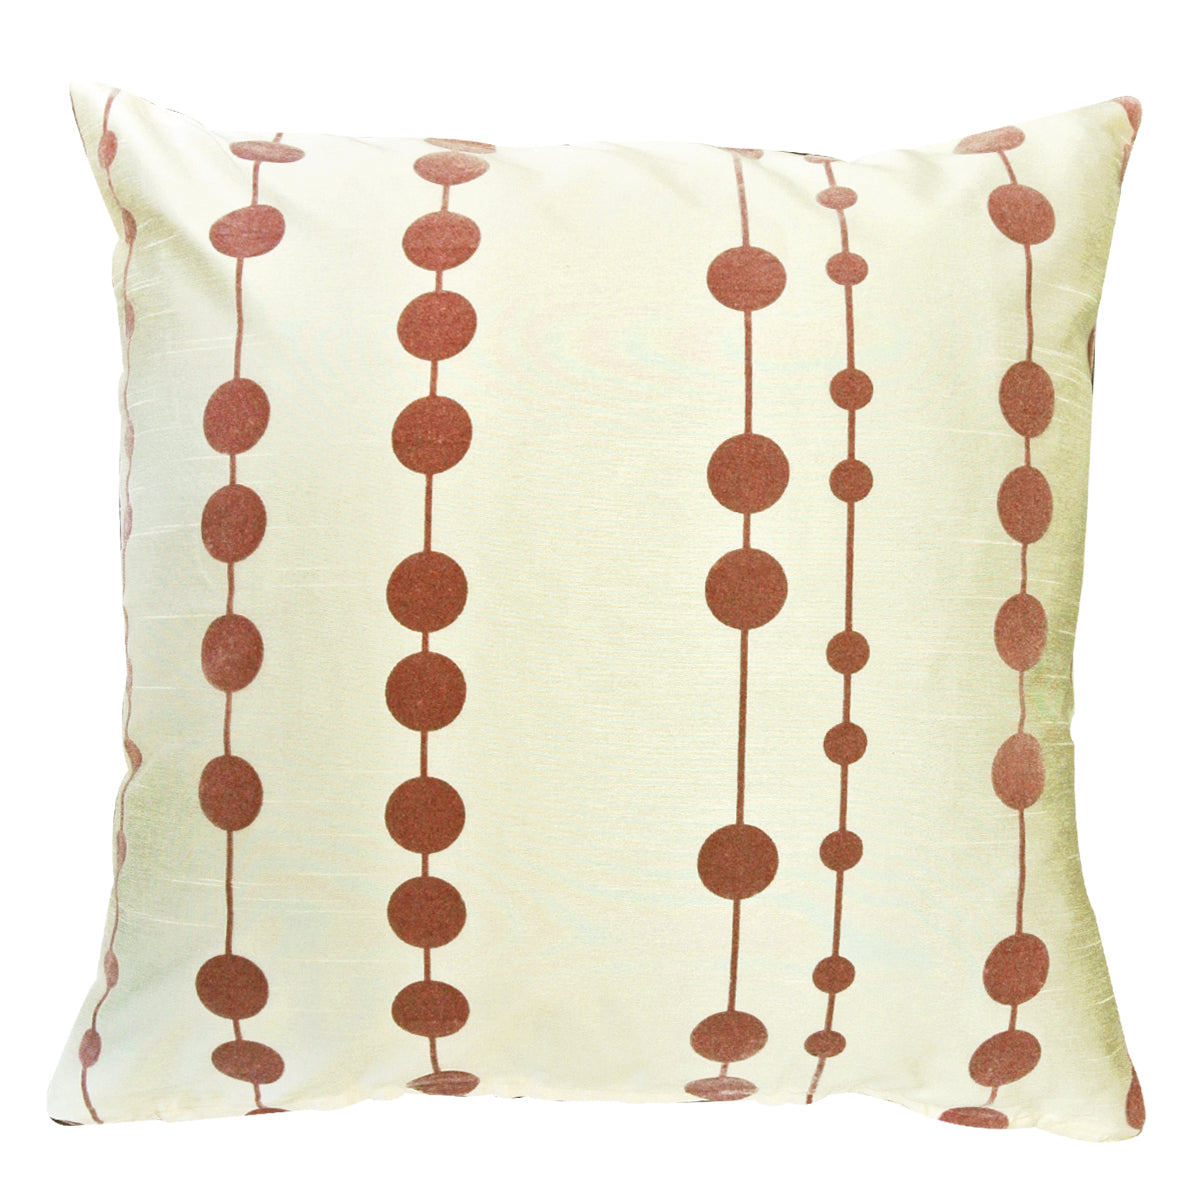 Kella Milla String of Dots Throw Pillow Cover